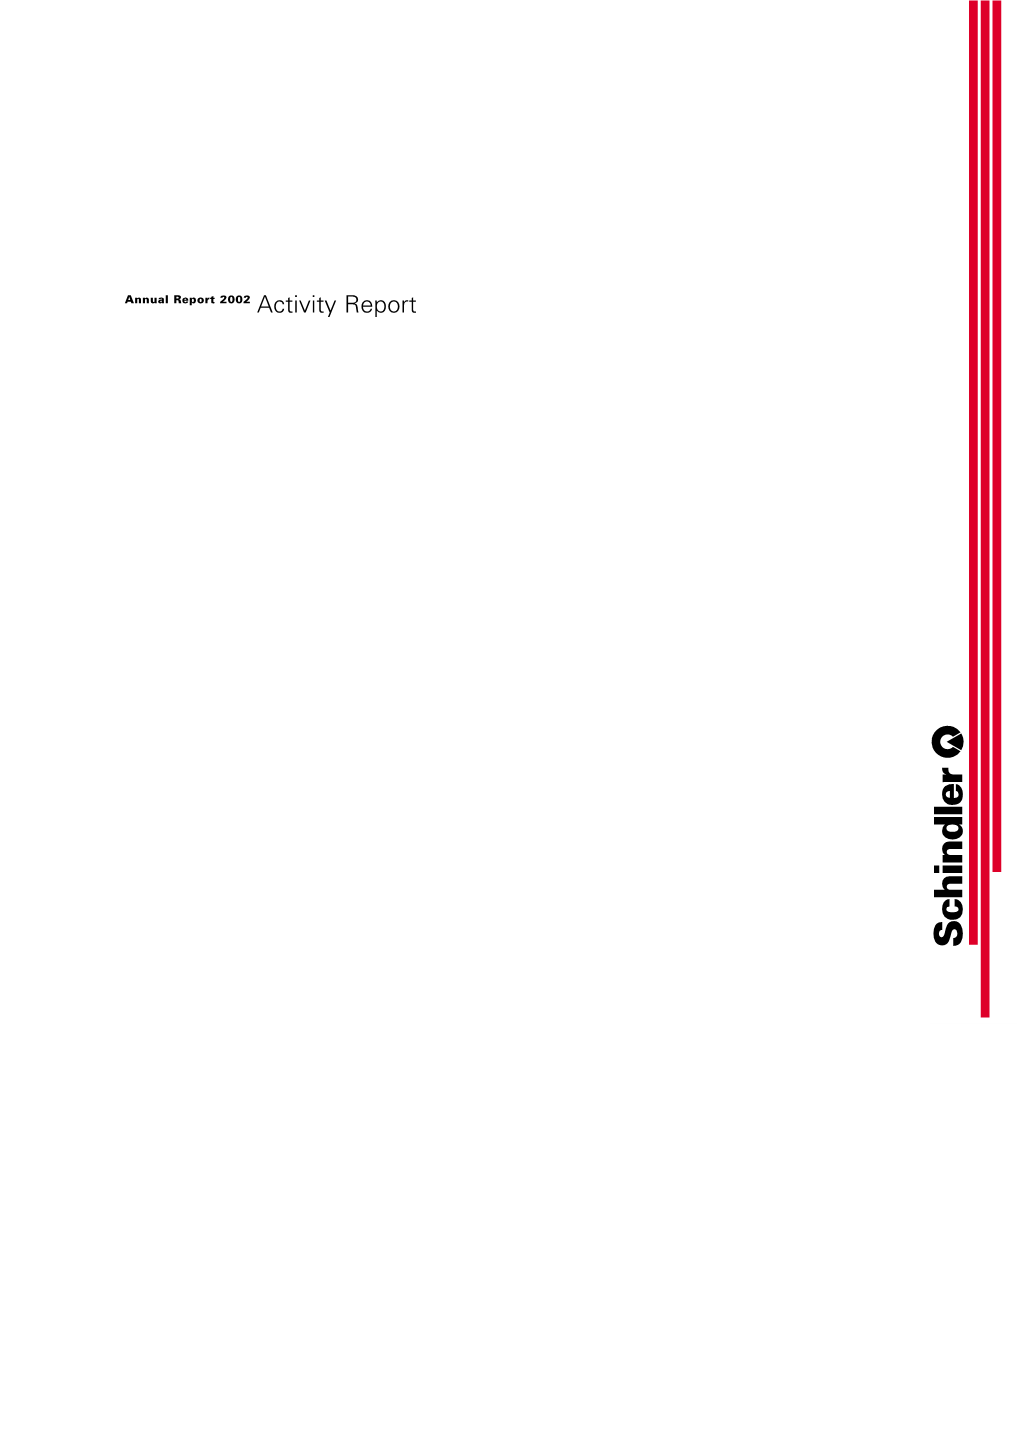 Annual Report (2002, English)